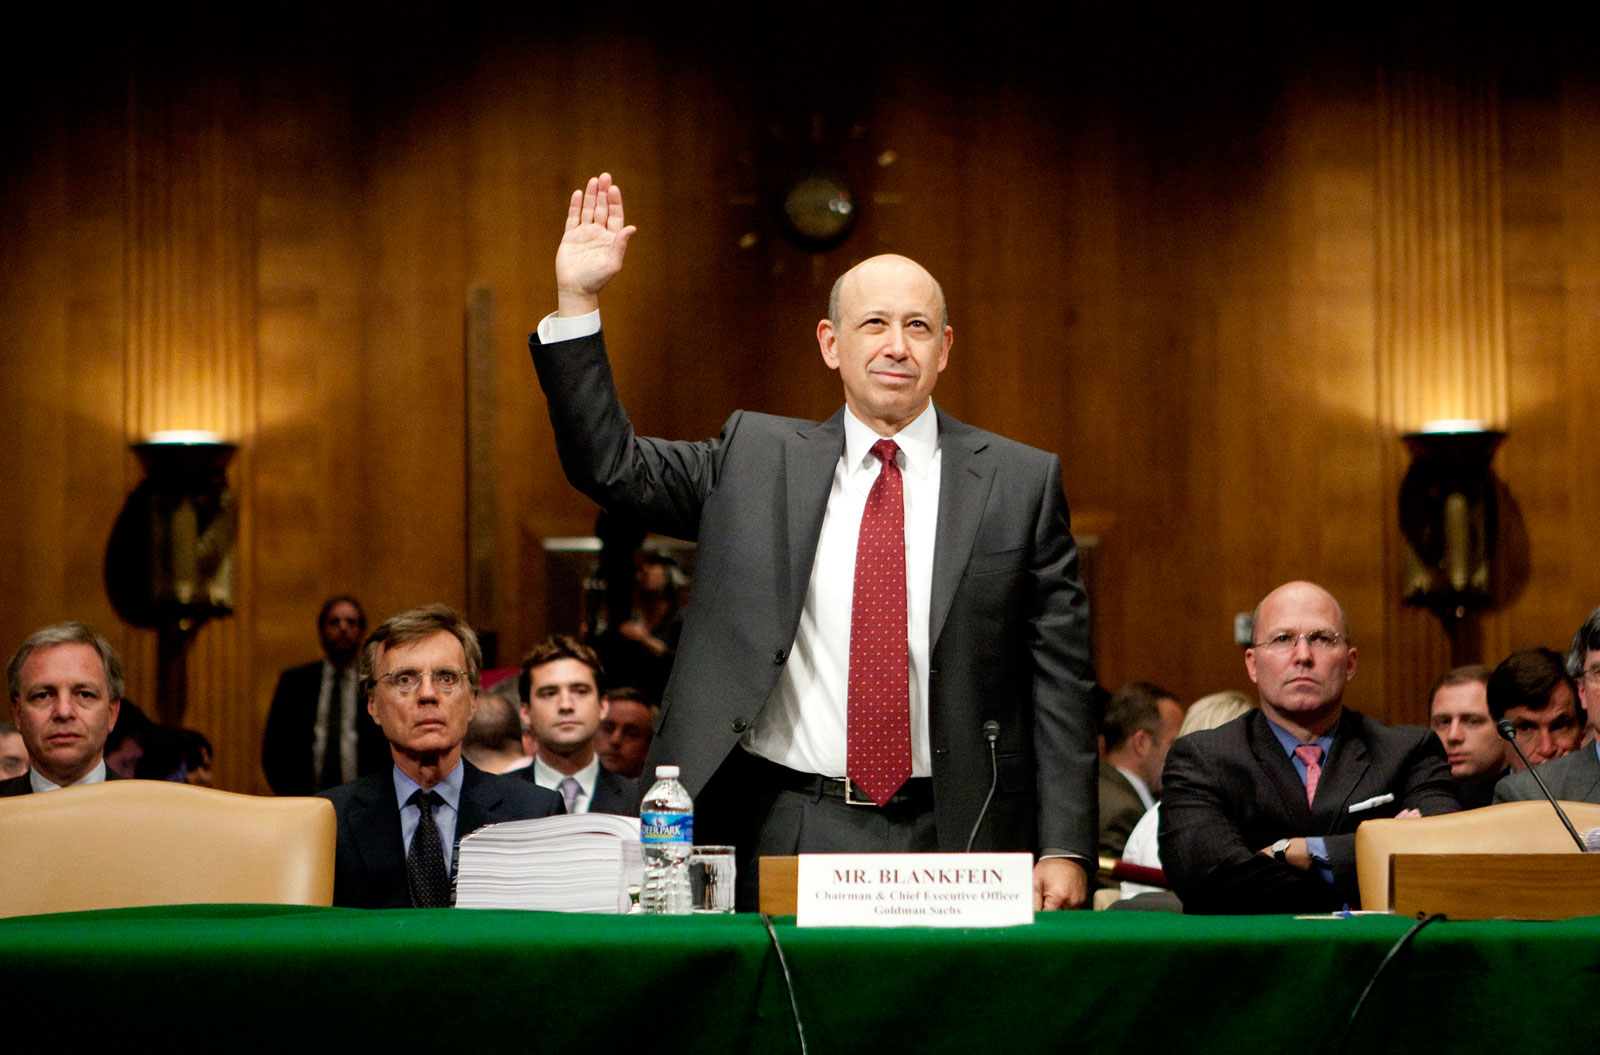 Goldman Sachs CEO Lloyd Blankfein, being sworn in at a Senate hearing on the financial crisis, Washington, D.C., April 27, 2010